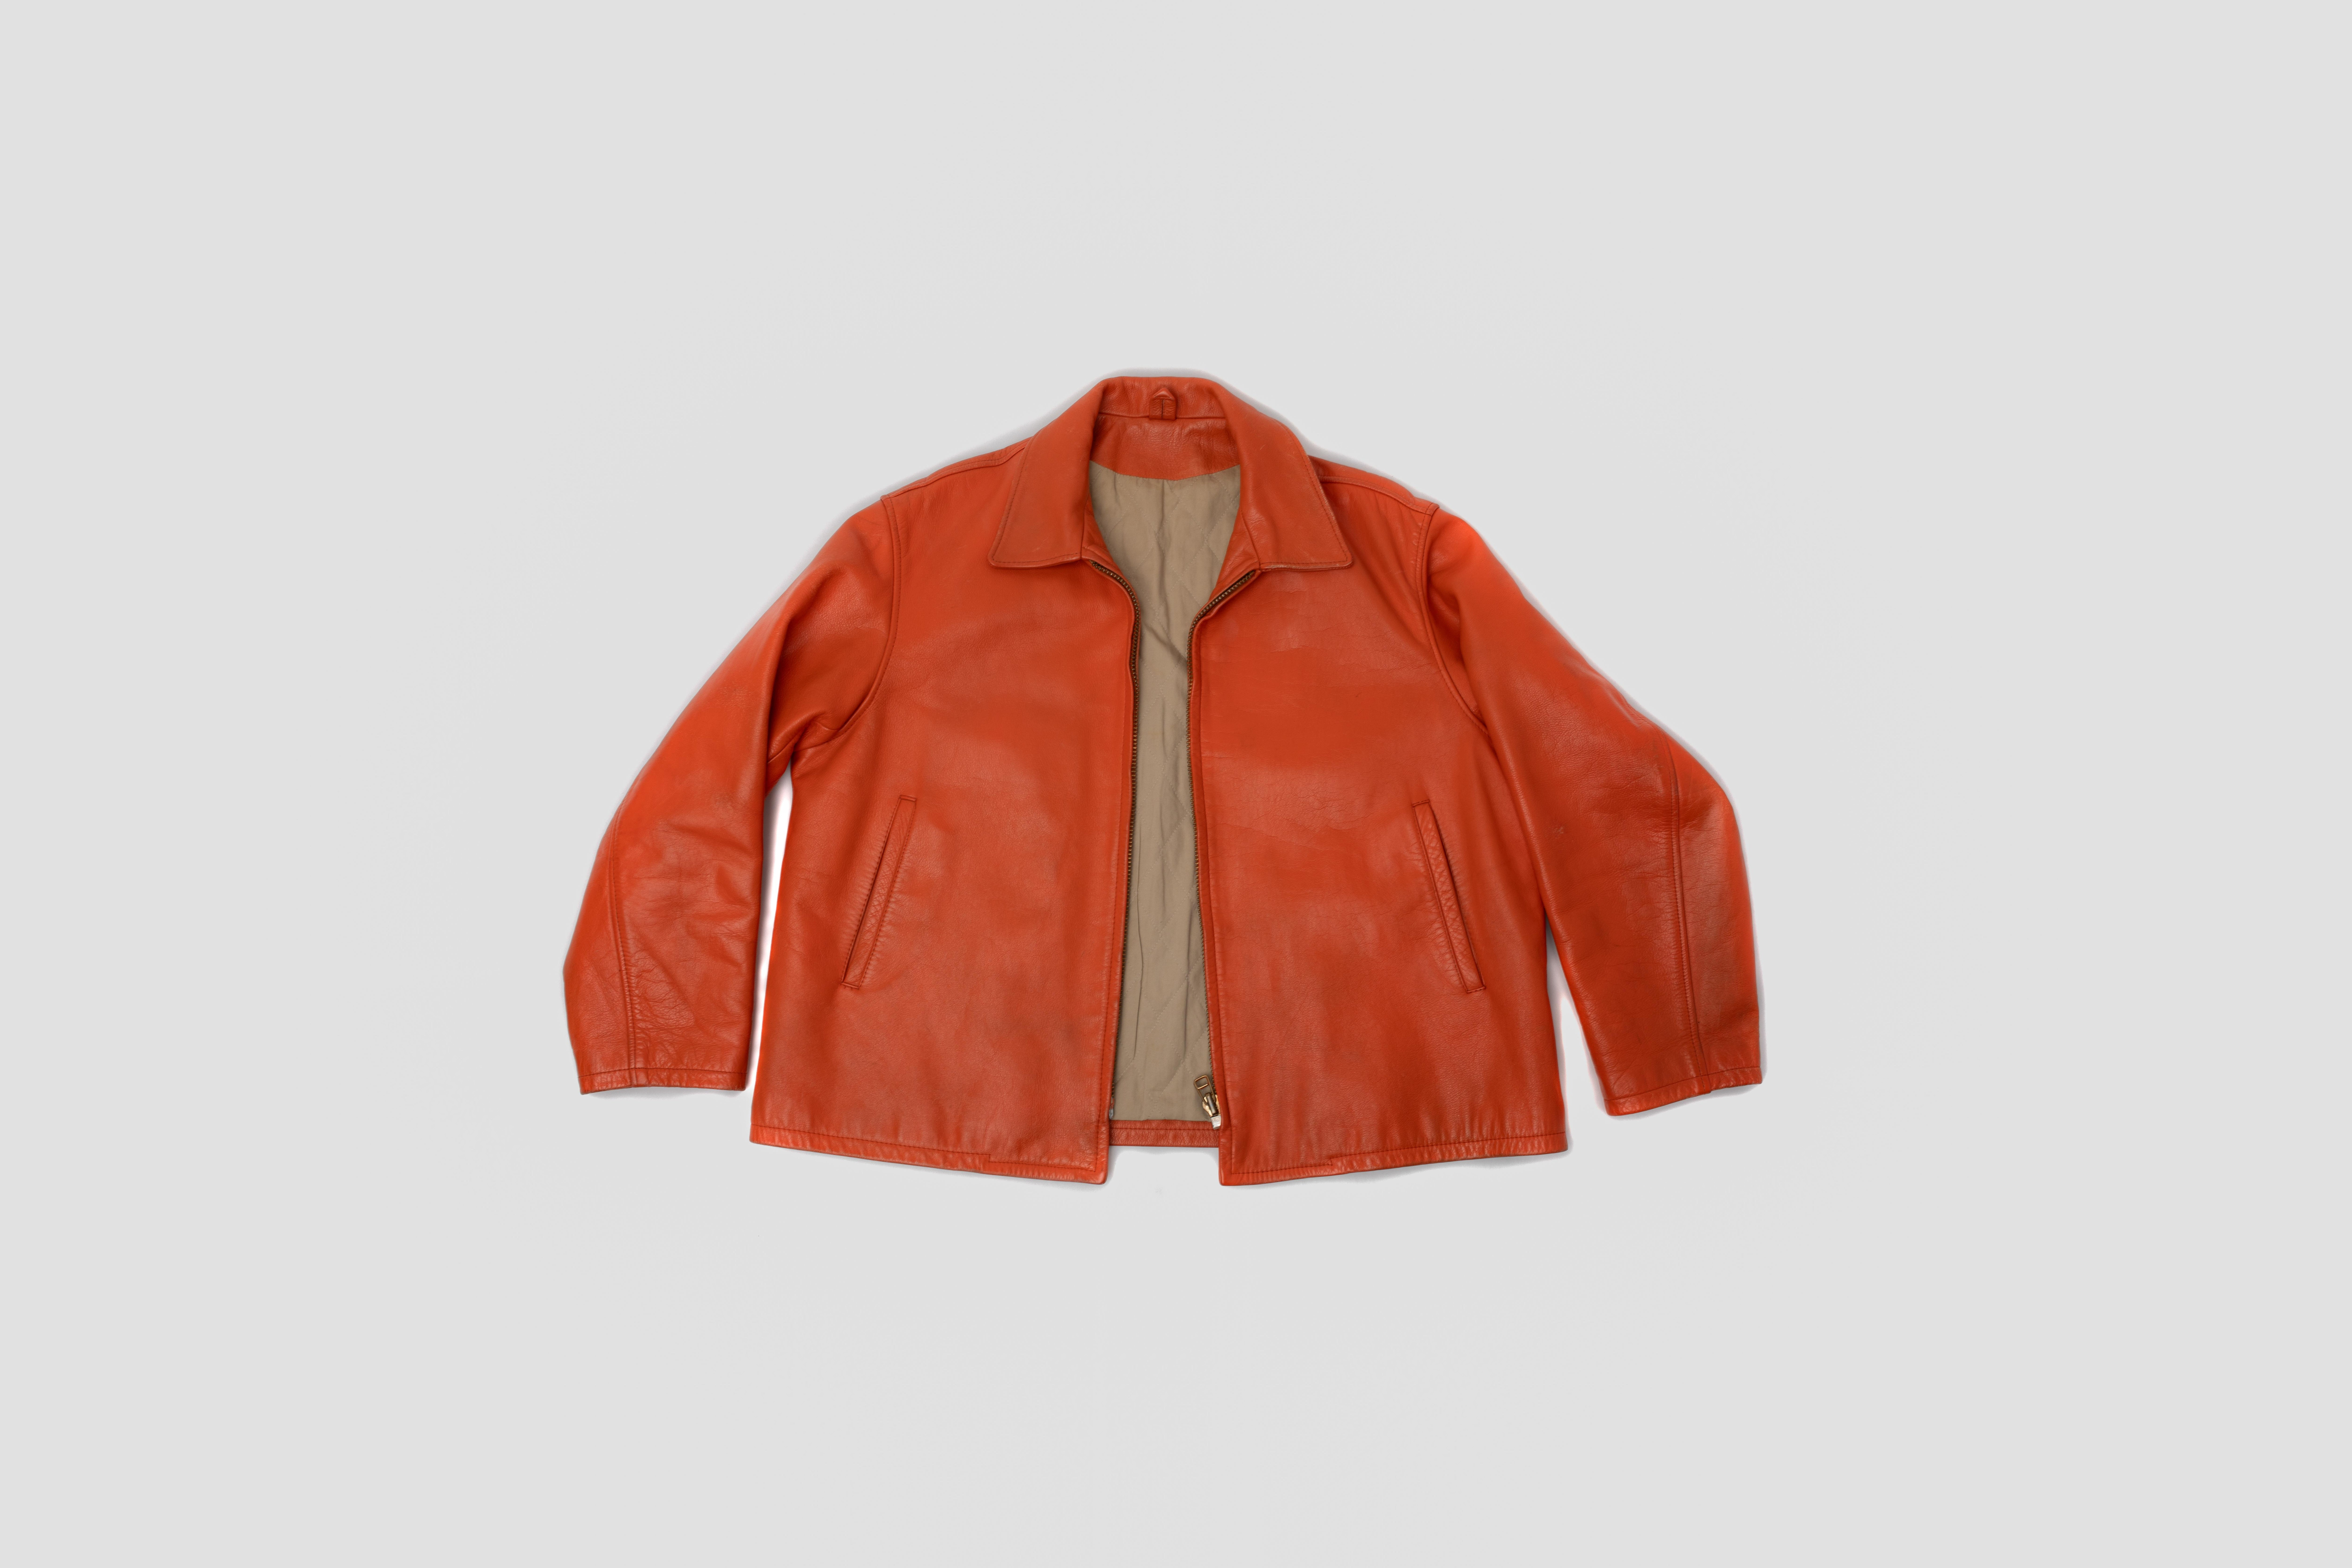 yohji yamamoto 1991 leather jacket